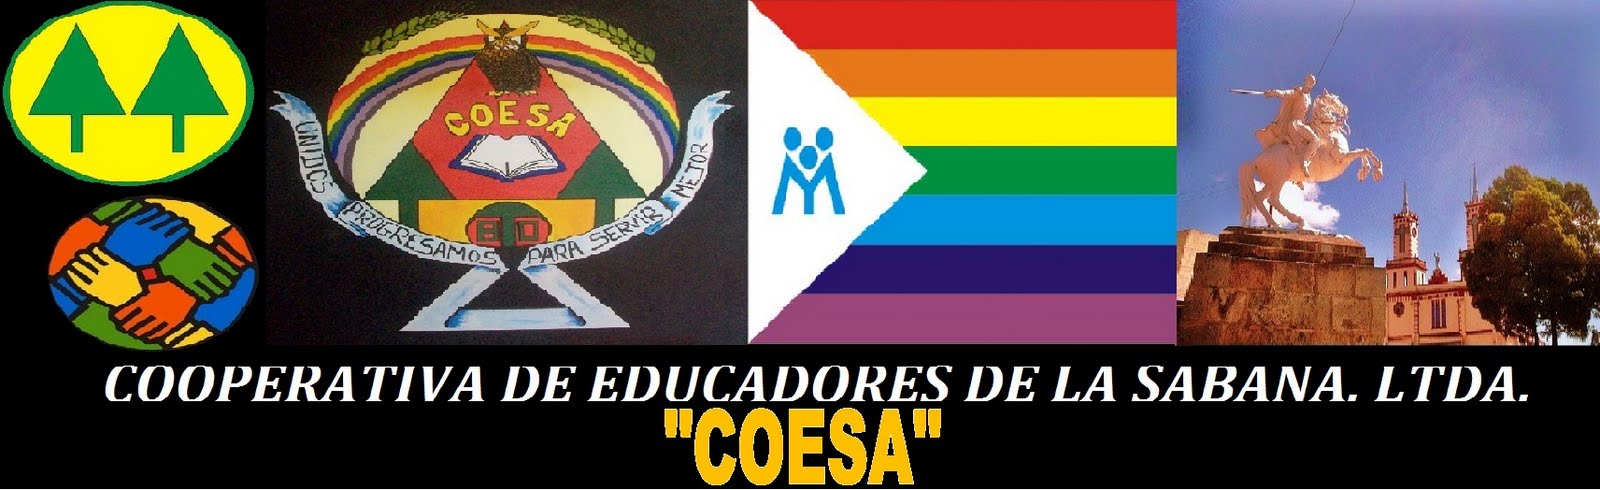 Cooperativa De Educadores De La Sabana "COESA"